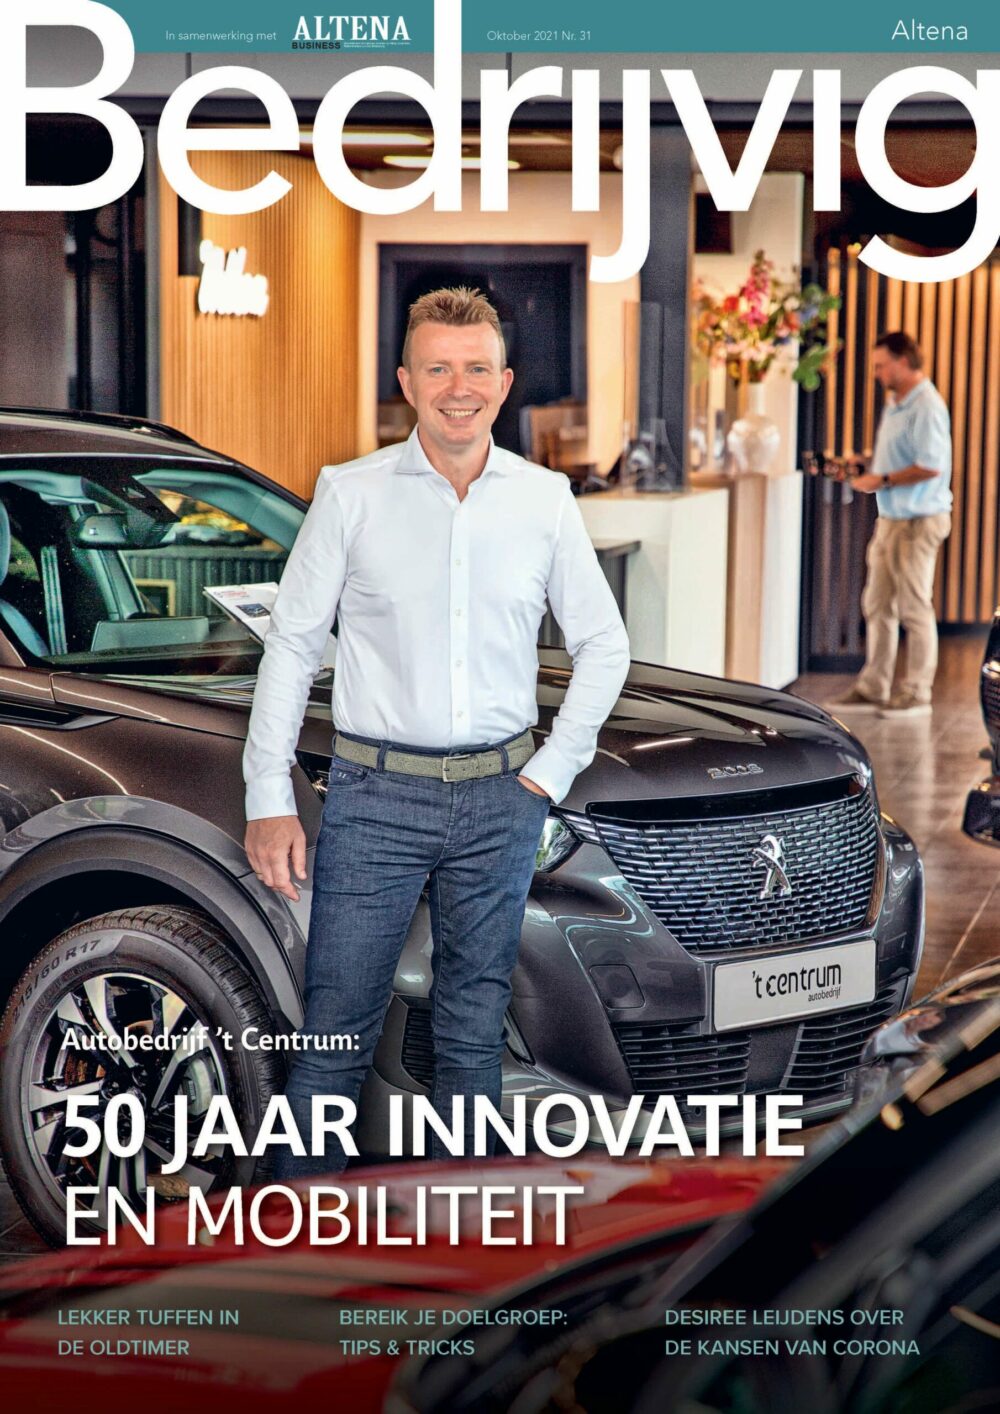 Bedrijvig Altena magazine nr31 cover